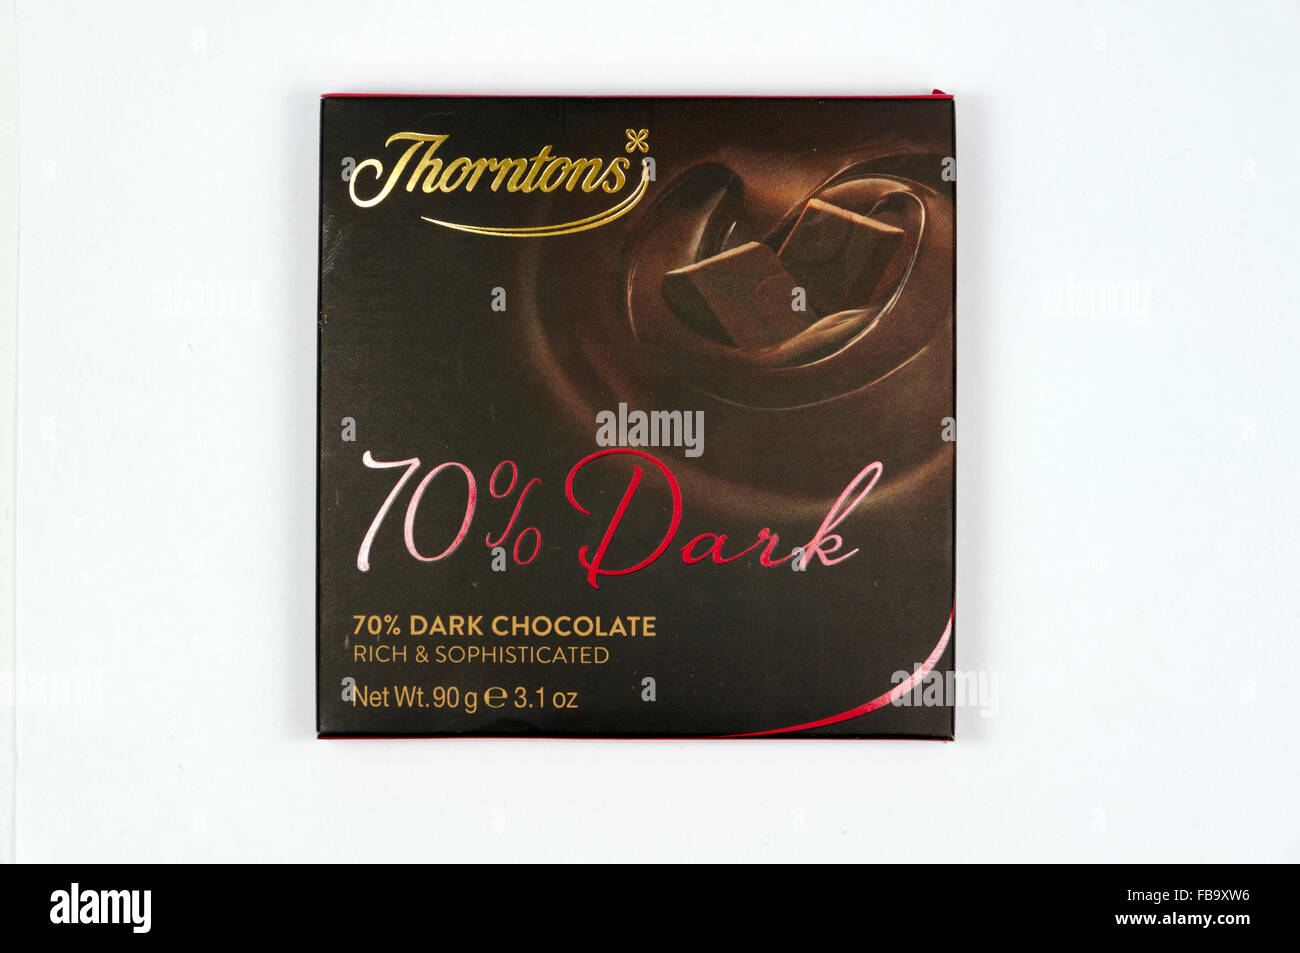 Thorntons 70% Dark chocolate bar. Foto Stock